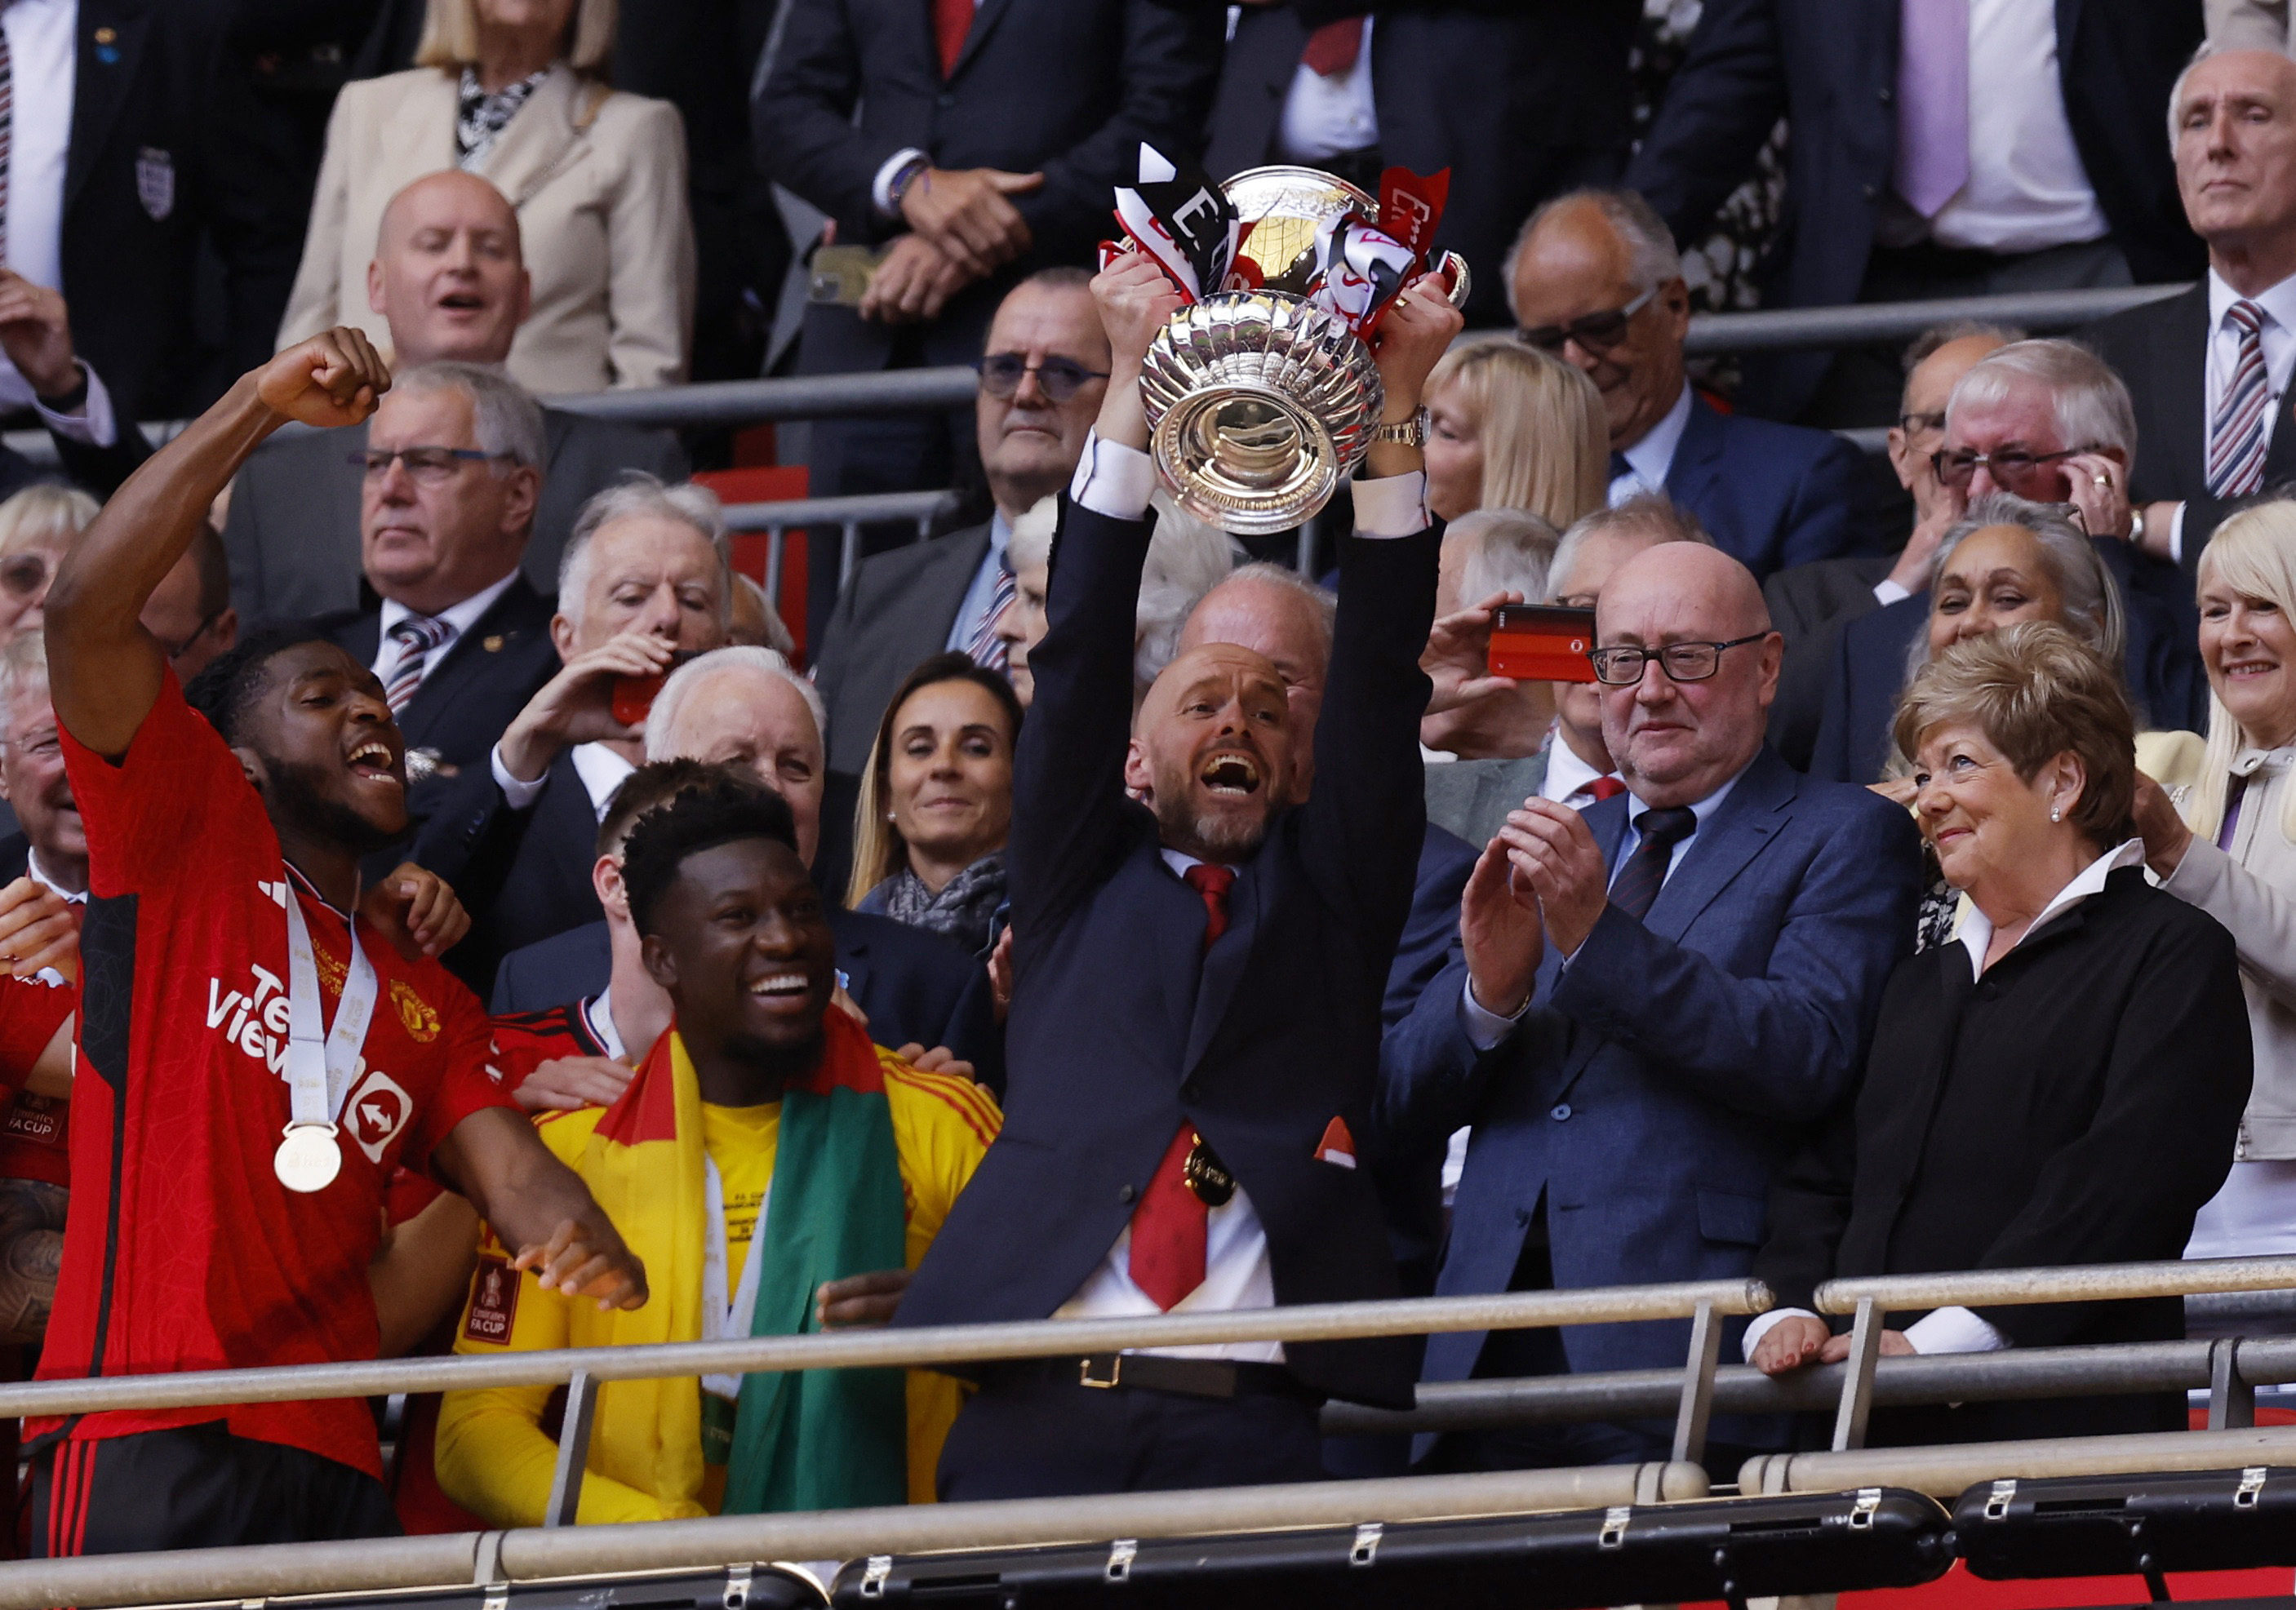 Garnacho, Mainoo seal stunning Cup win for Man United | Reuters